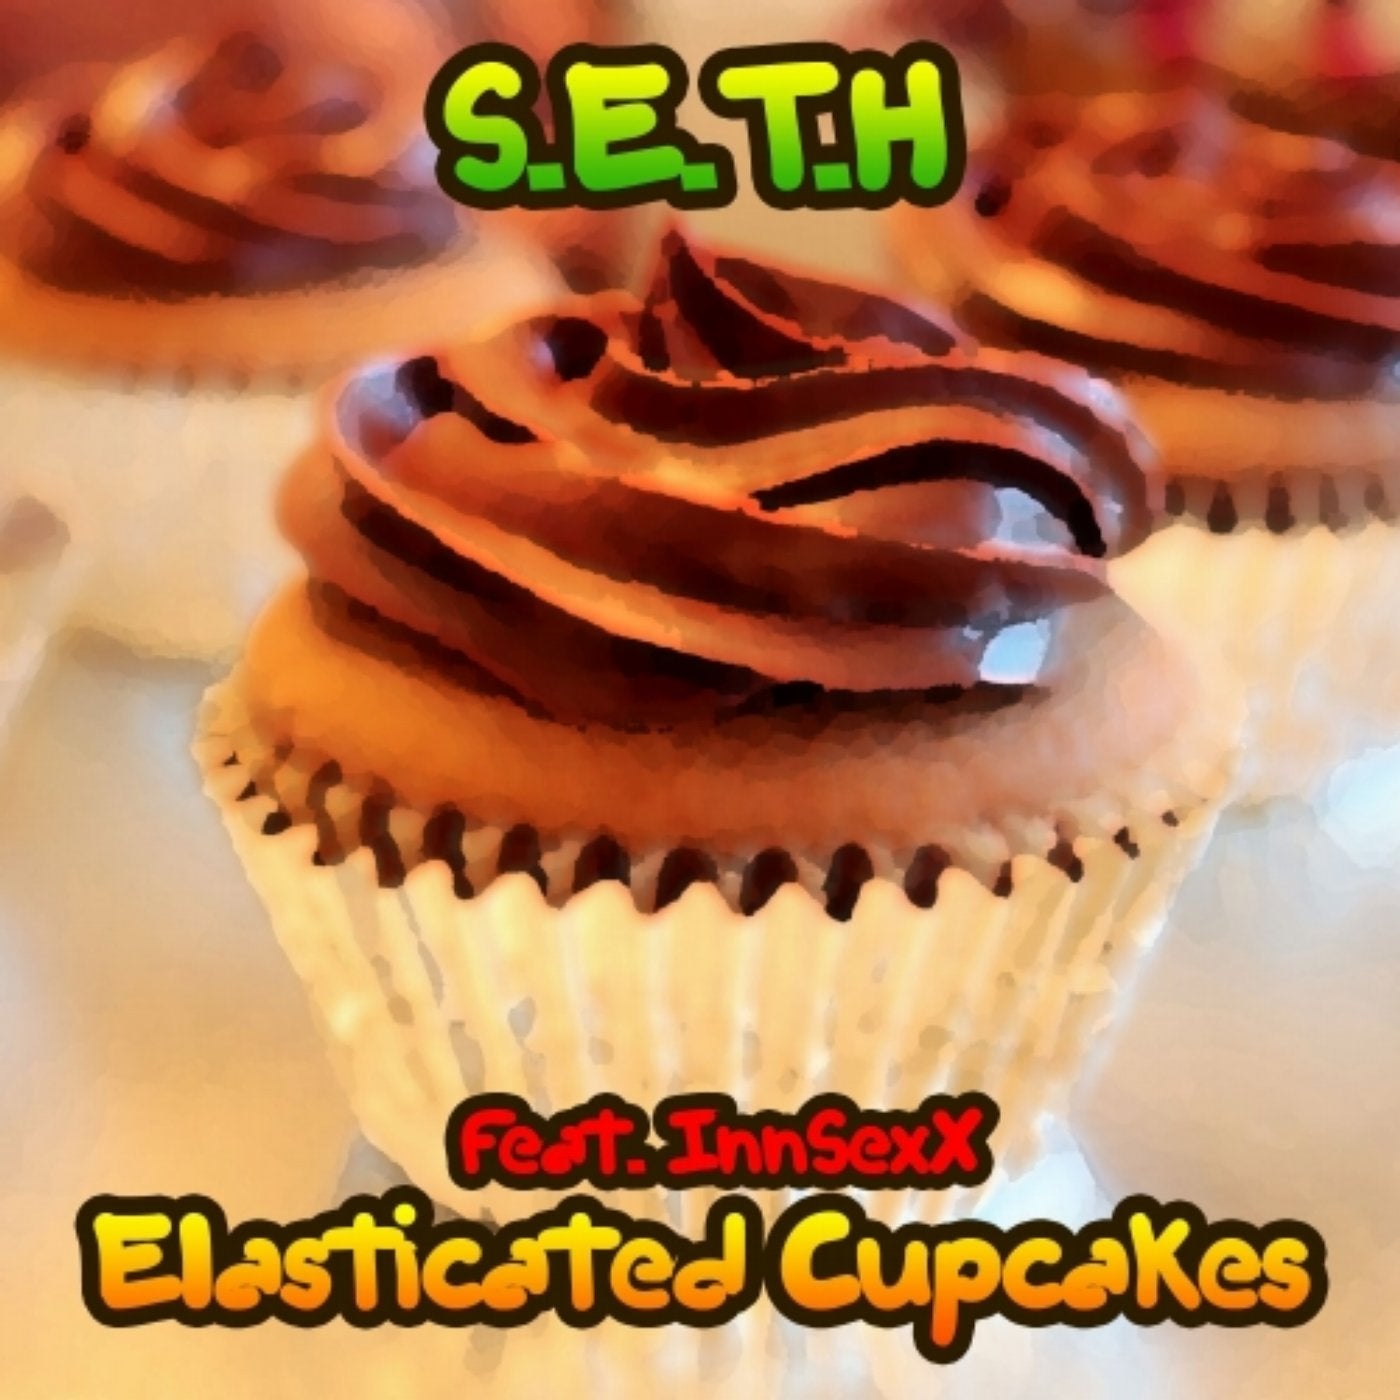 Elasticated Cupcakes